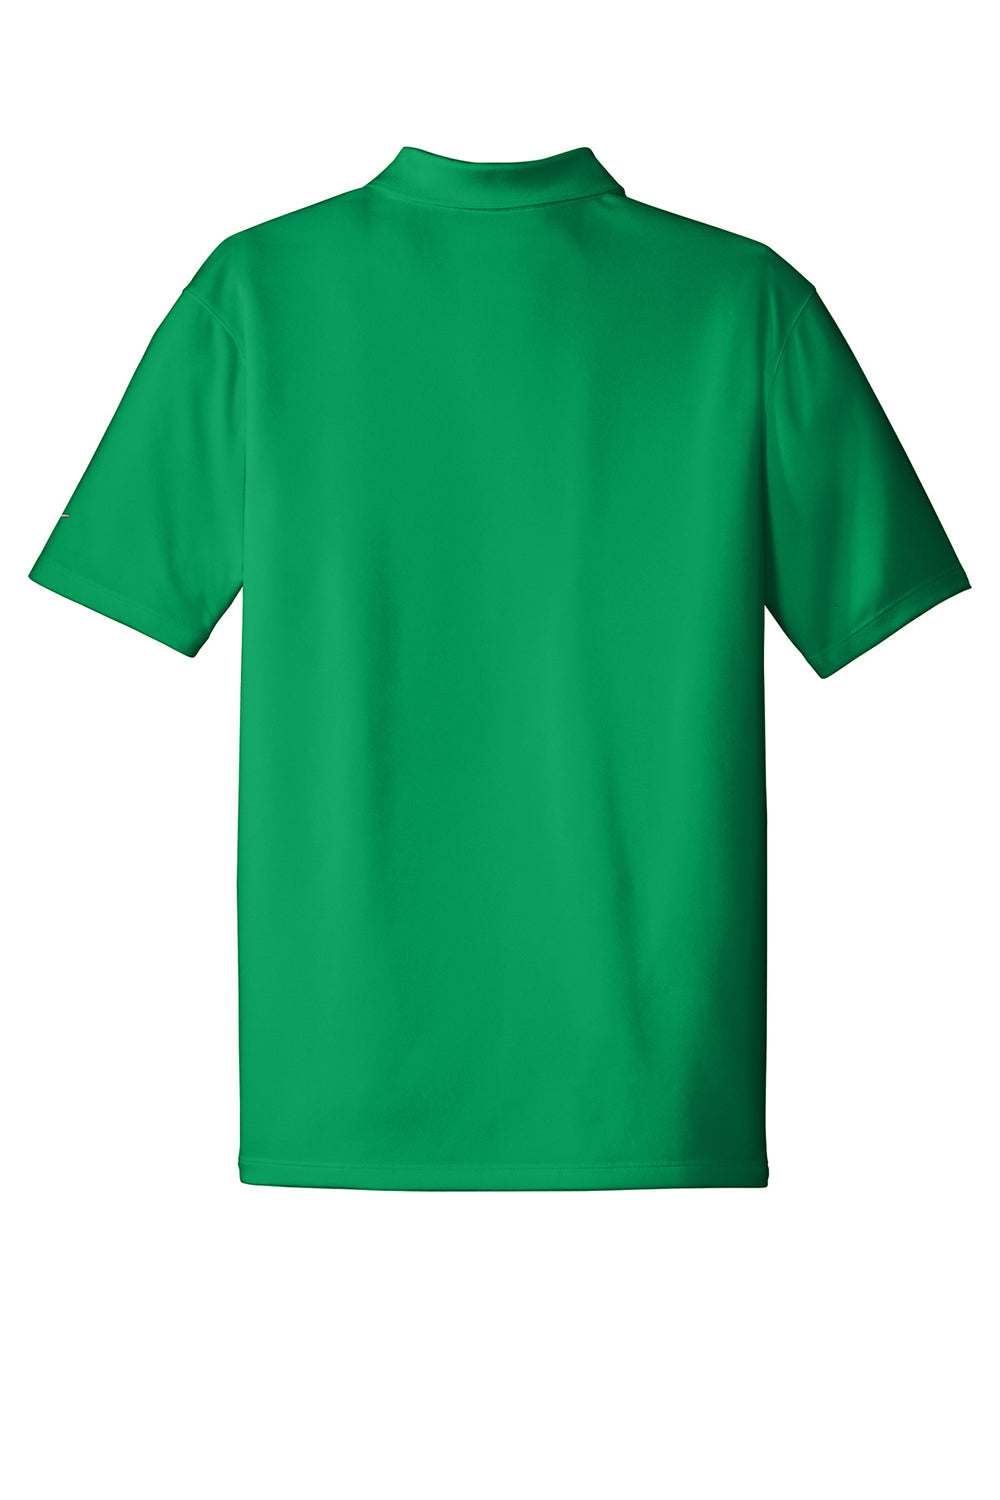 Nike 838956 Mens Players Dri-Fit Moisture Wicking Short Sleeve Polo Shirt Pine Green Flat Back